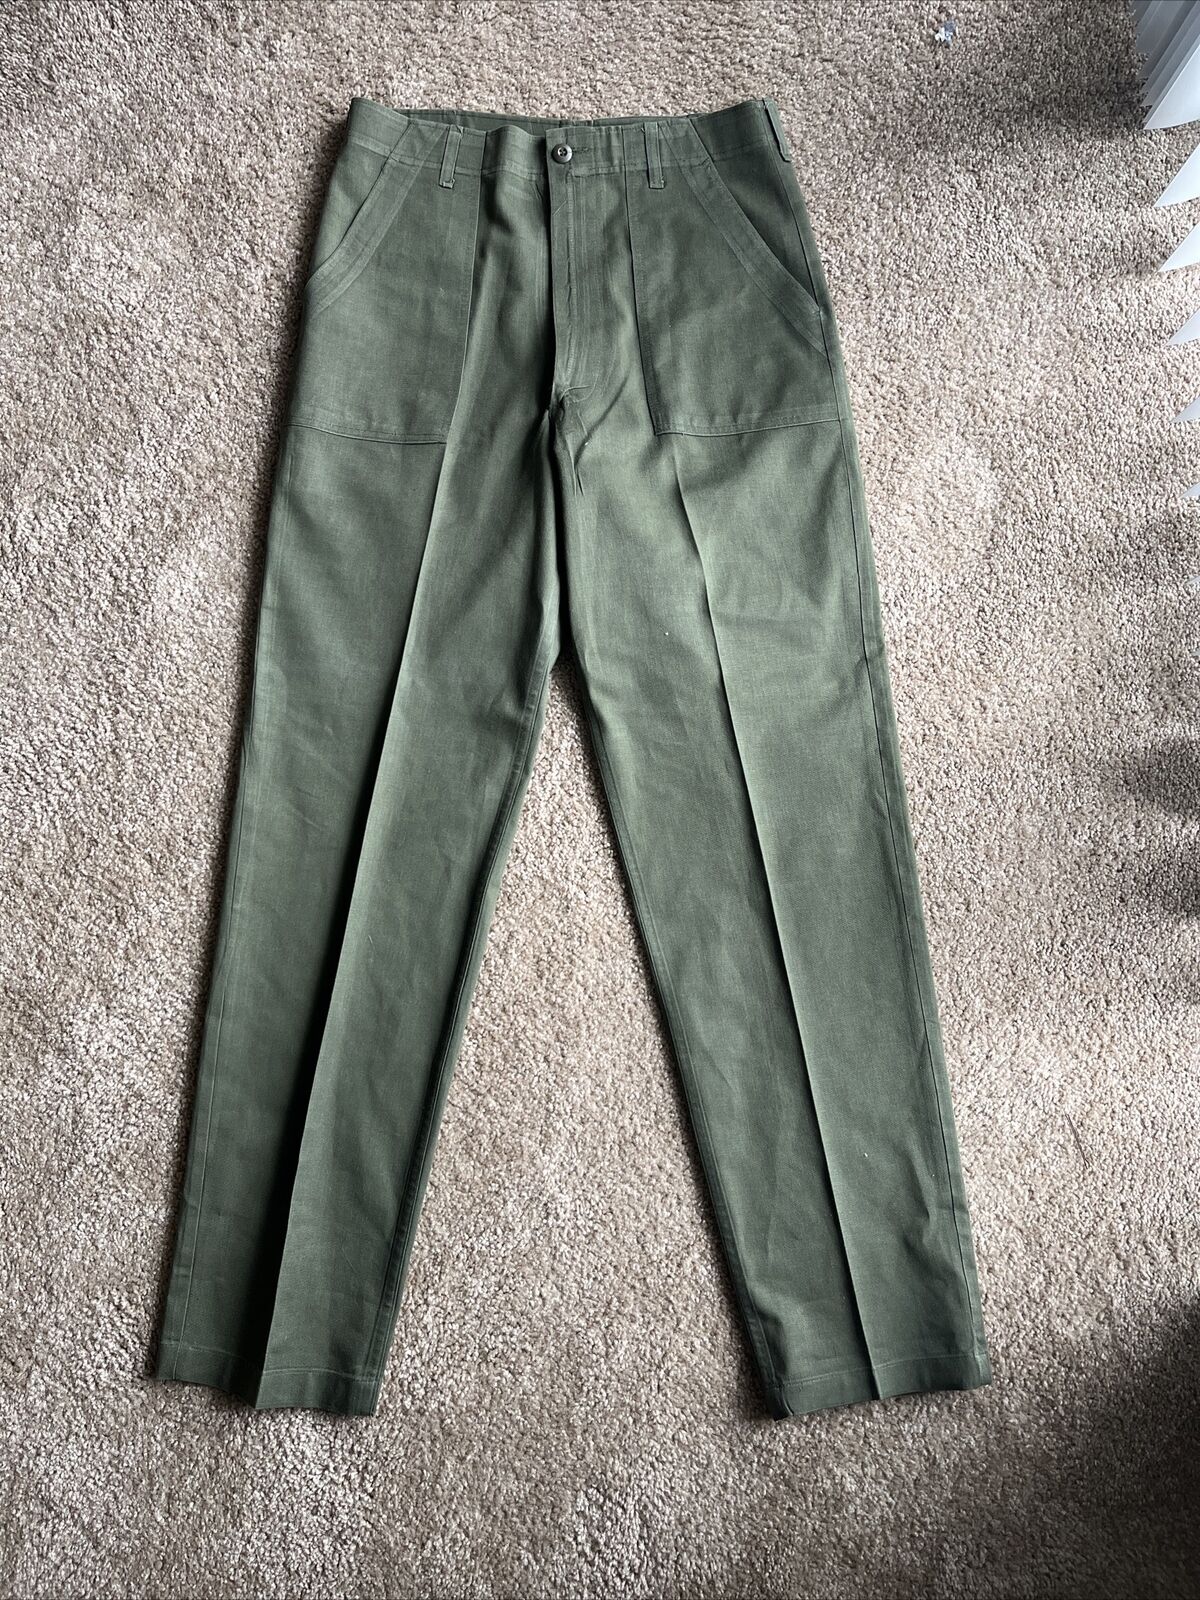 Vintage Military Utility Trouser OG-507 Pants Fits 36x35 Green Post-Vietnam